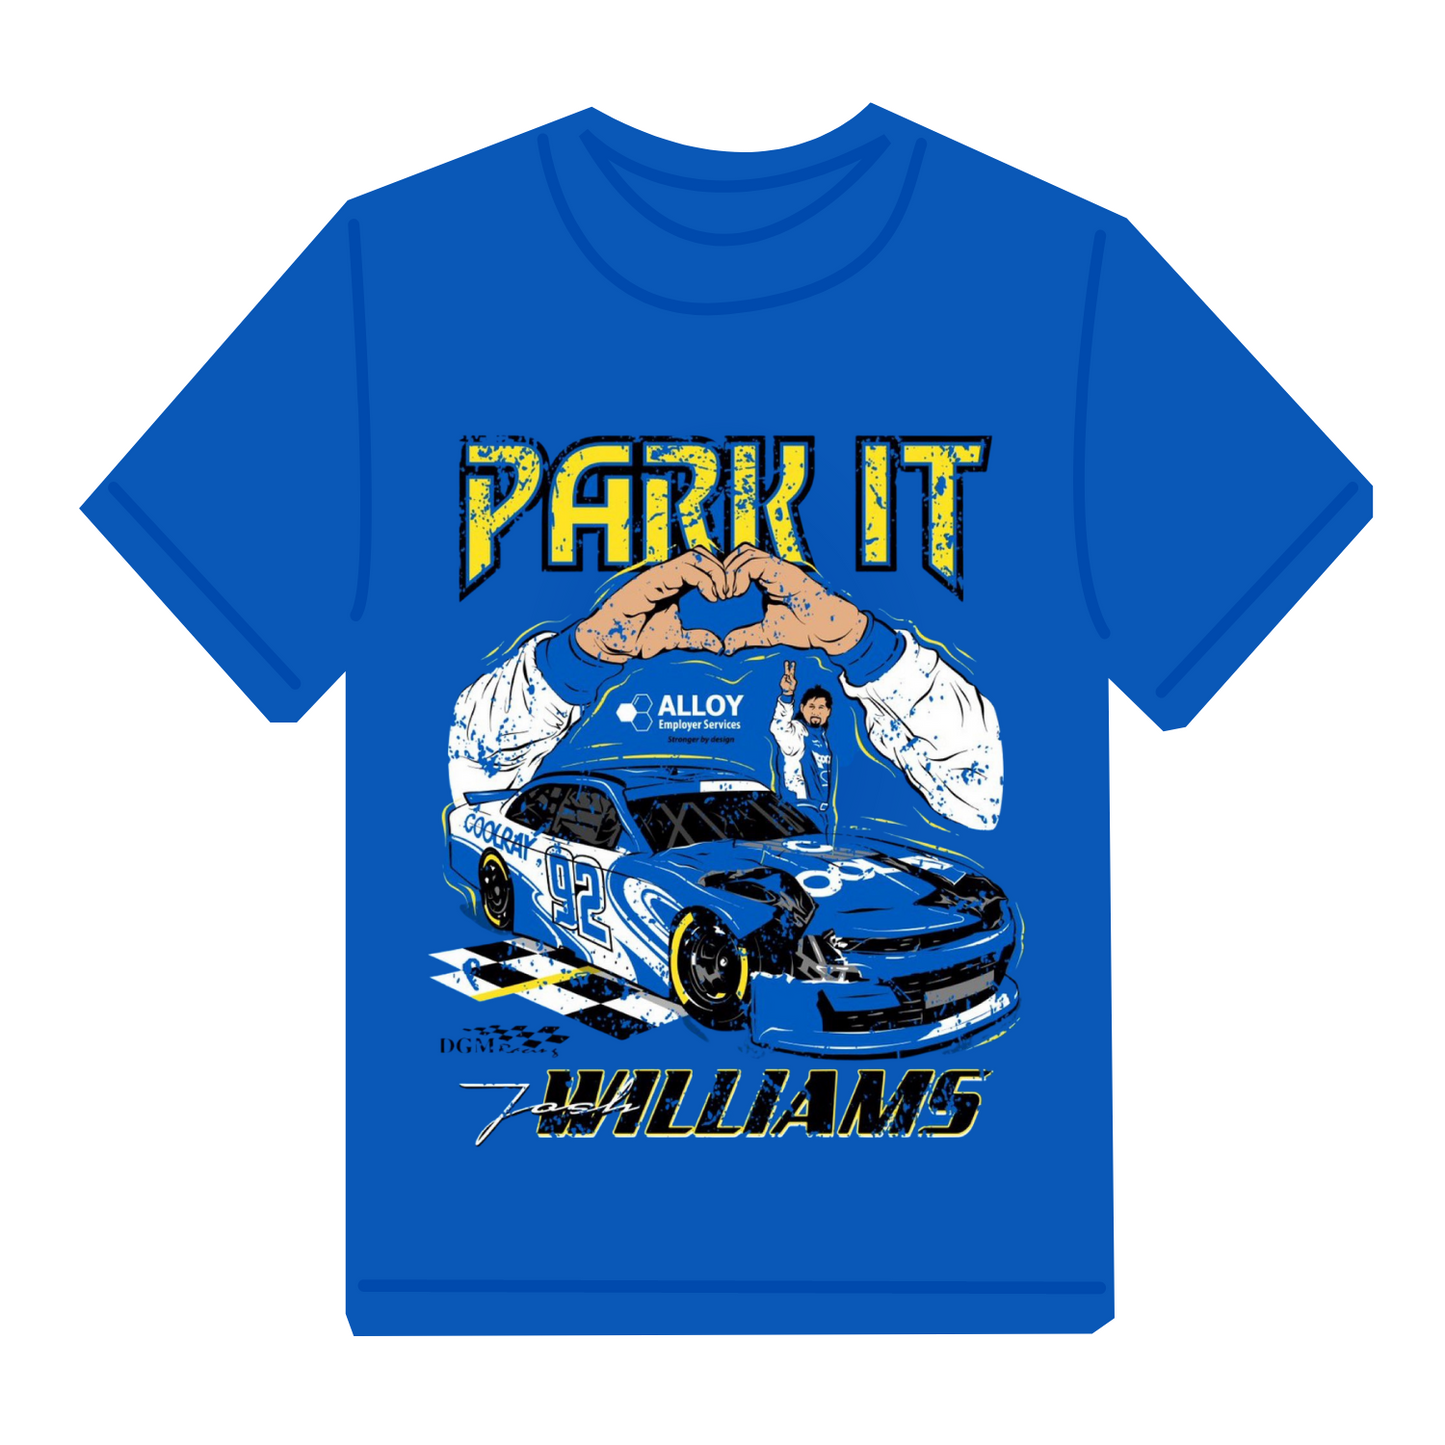 Josh Williams 'Park It' Shirt